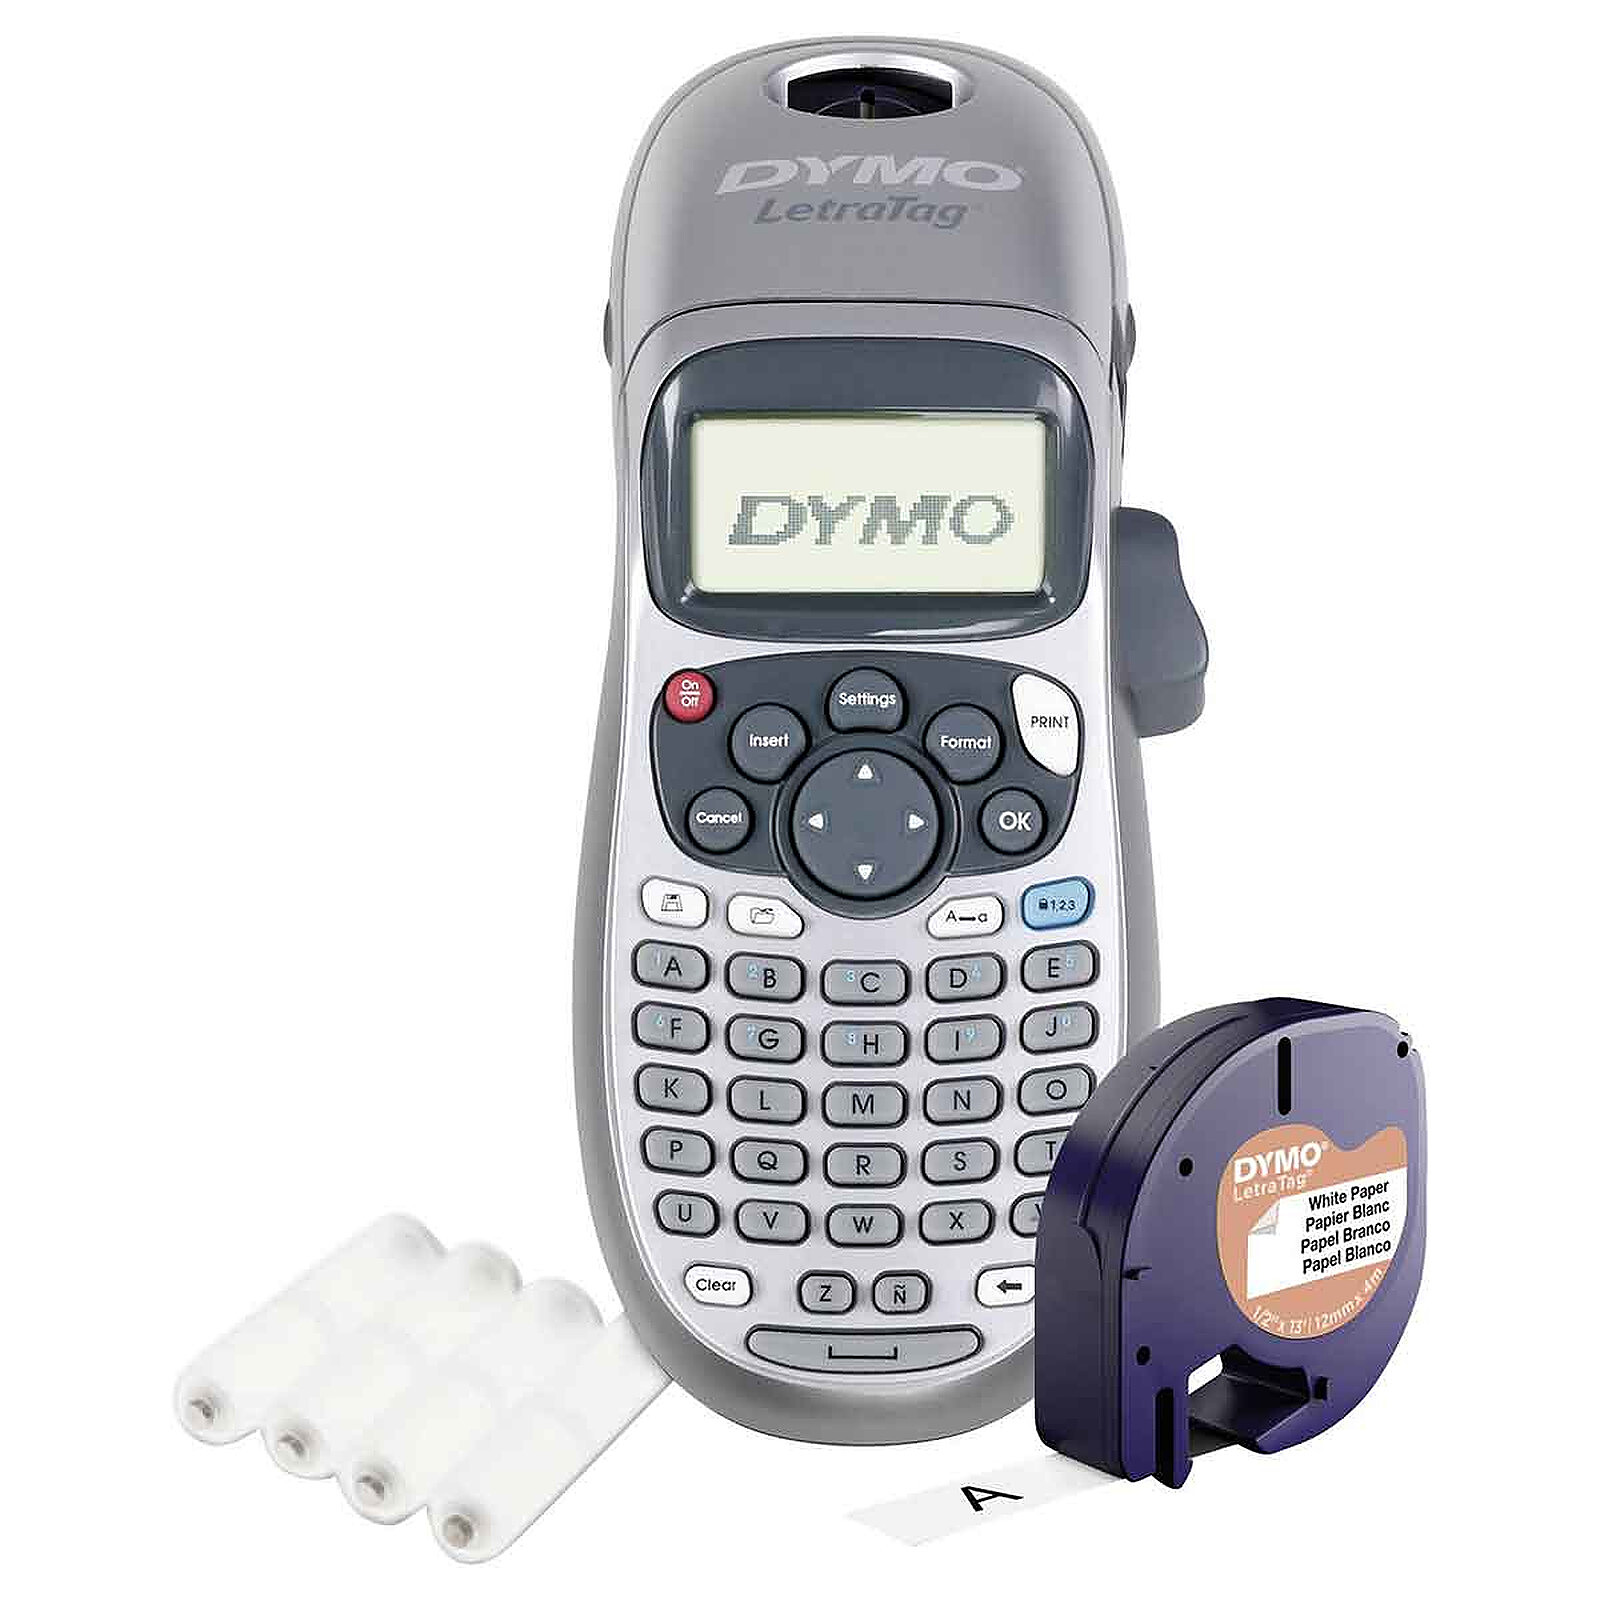 DYMO LetraTag Plus LT-100H Silver - Label maker - LDLC 3-year warranty